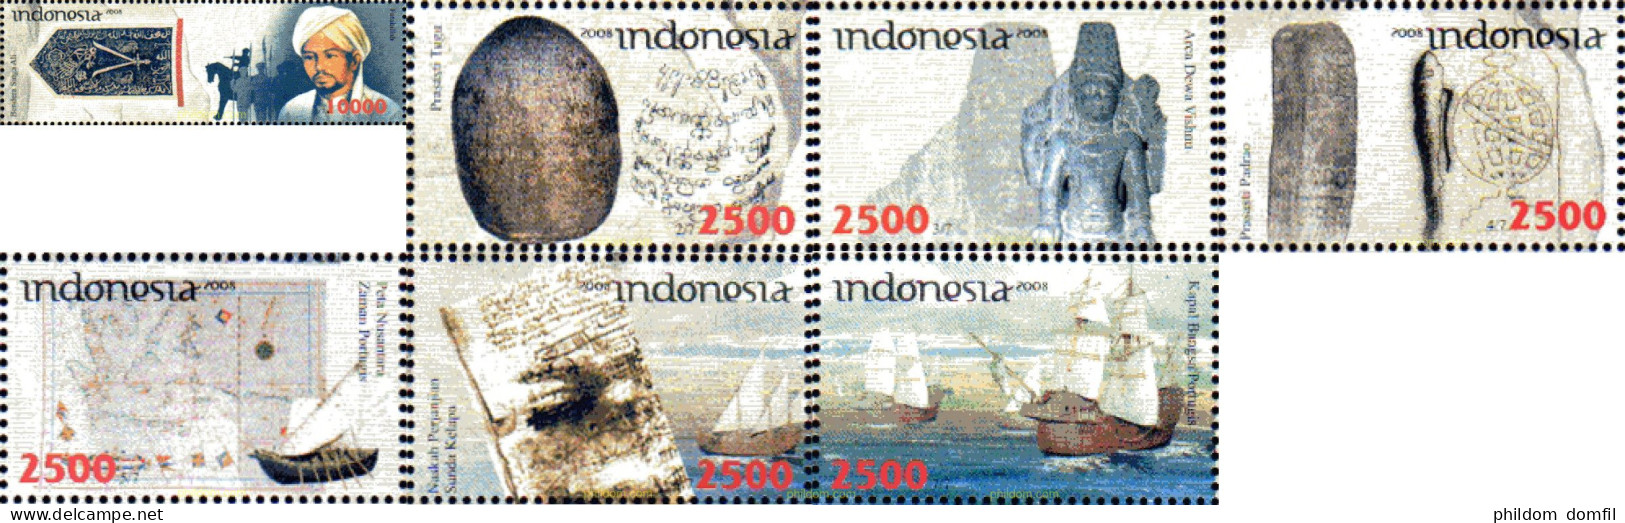 237914 MNH INDONESIA 2008  - Indonesia